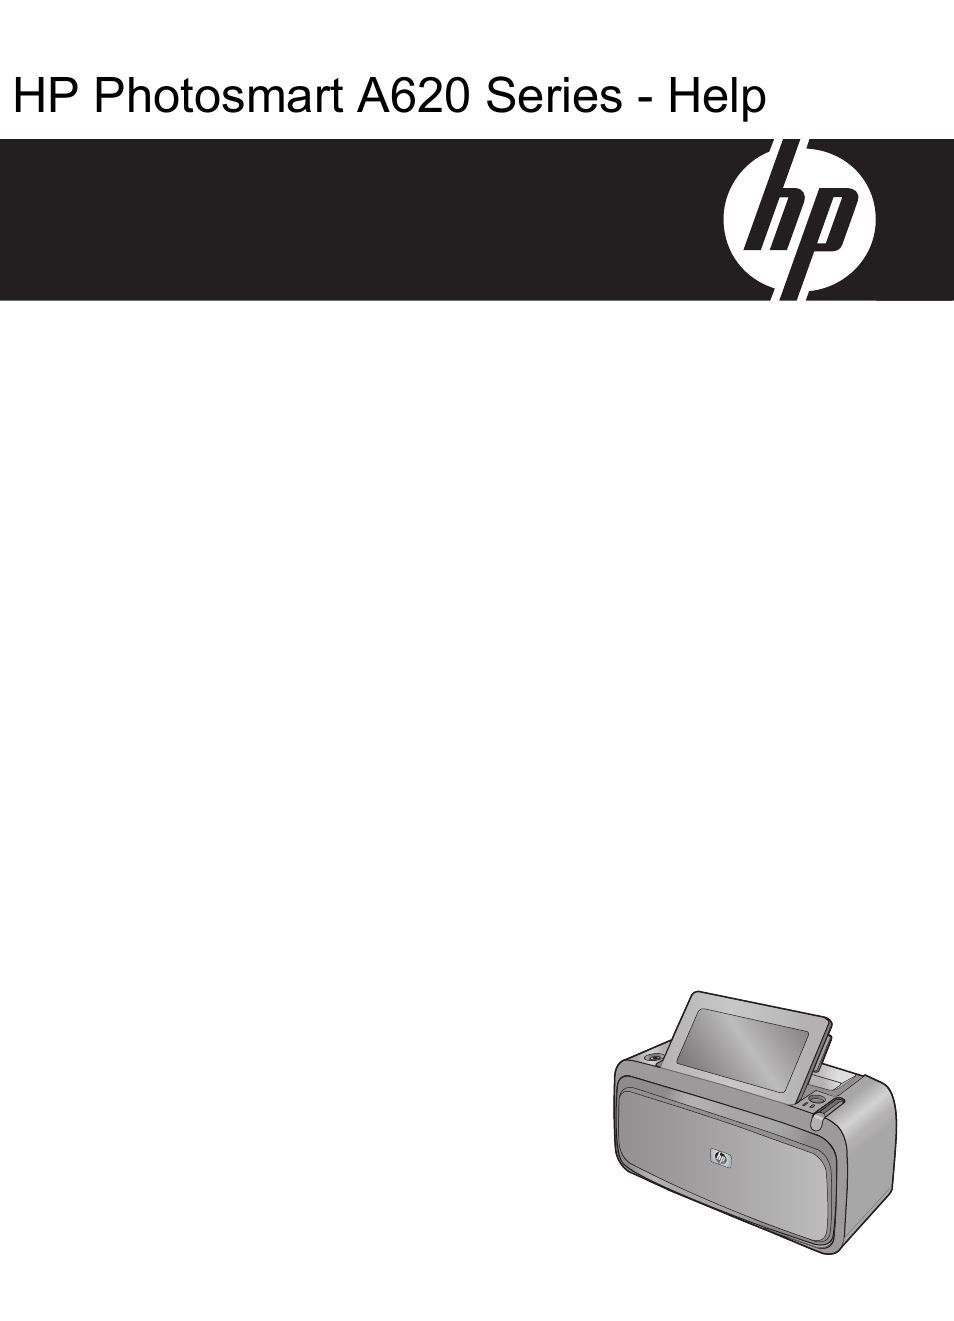 HP A620 Photosmart Compact Photo Printer 